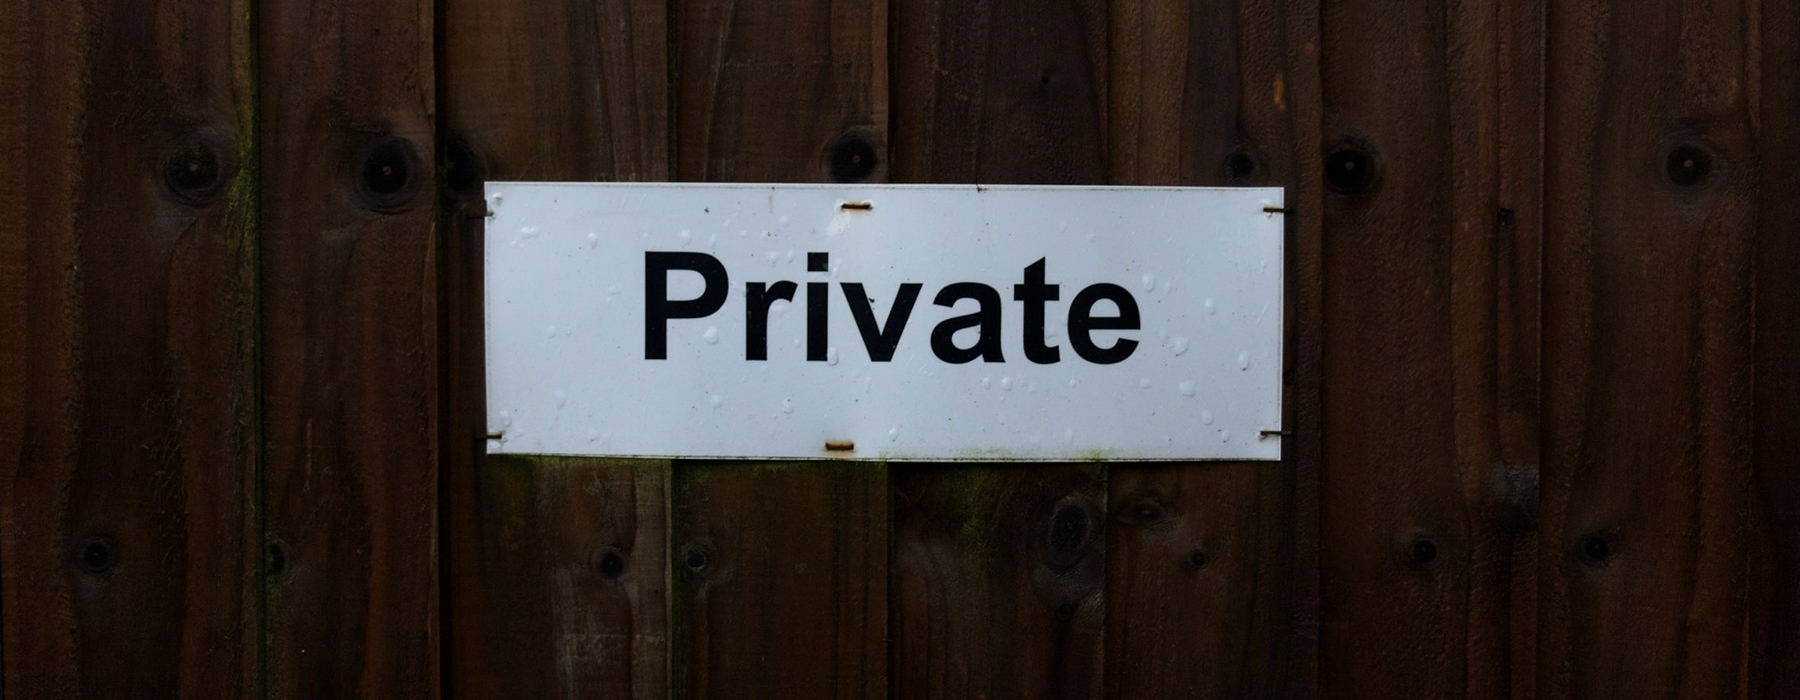 Private policy